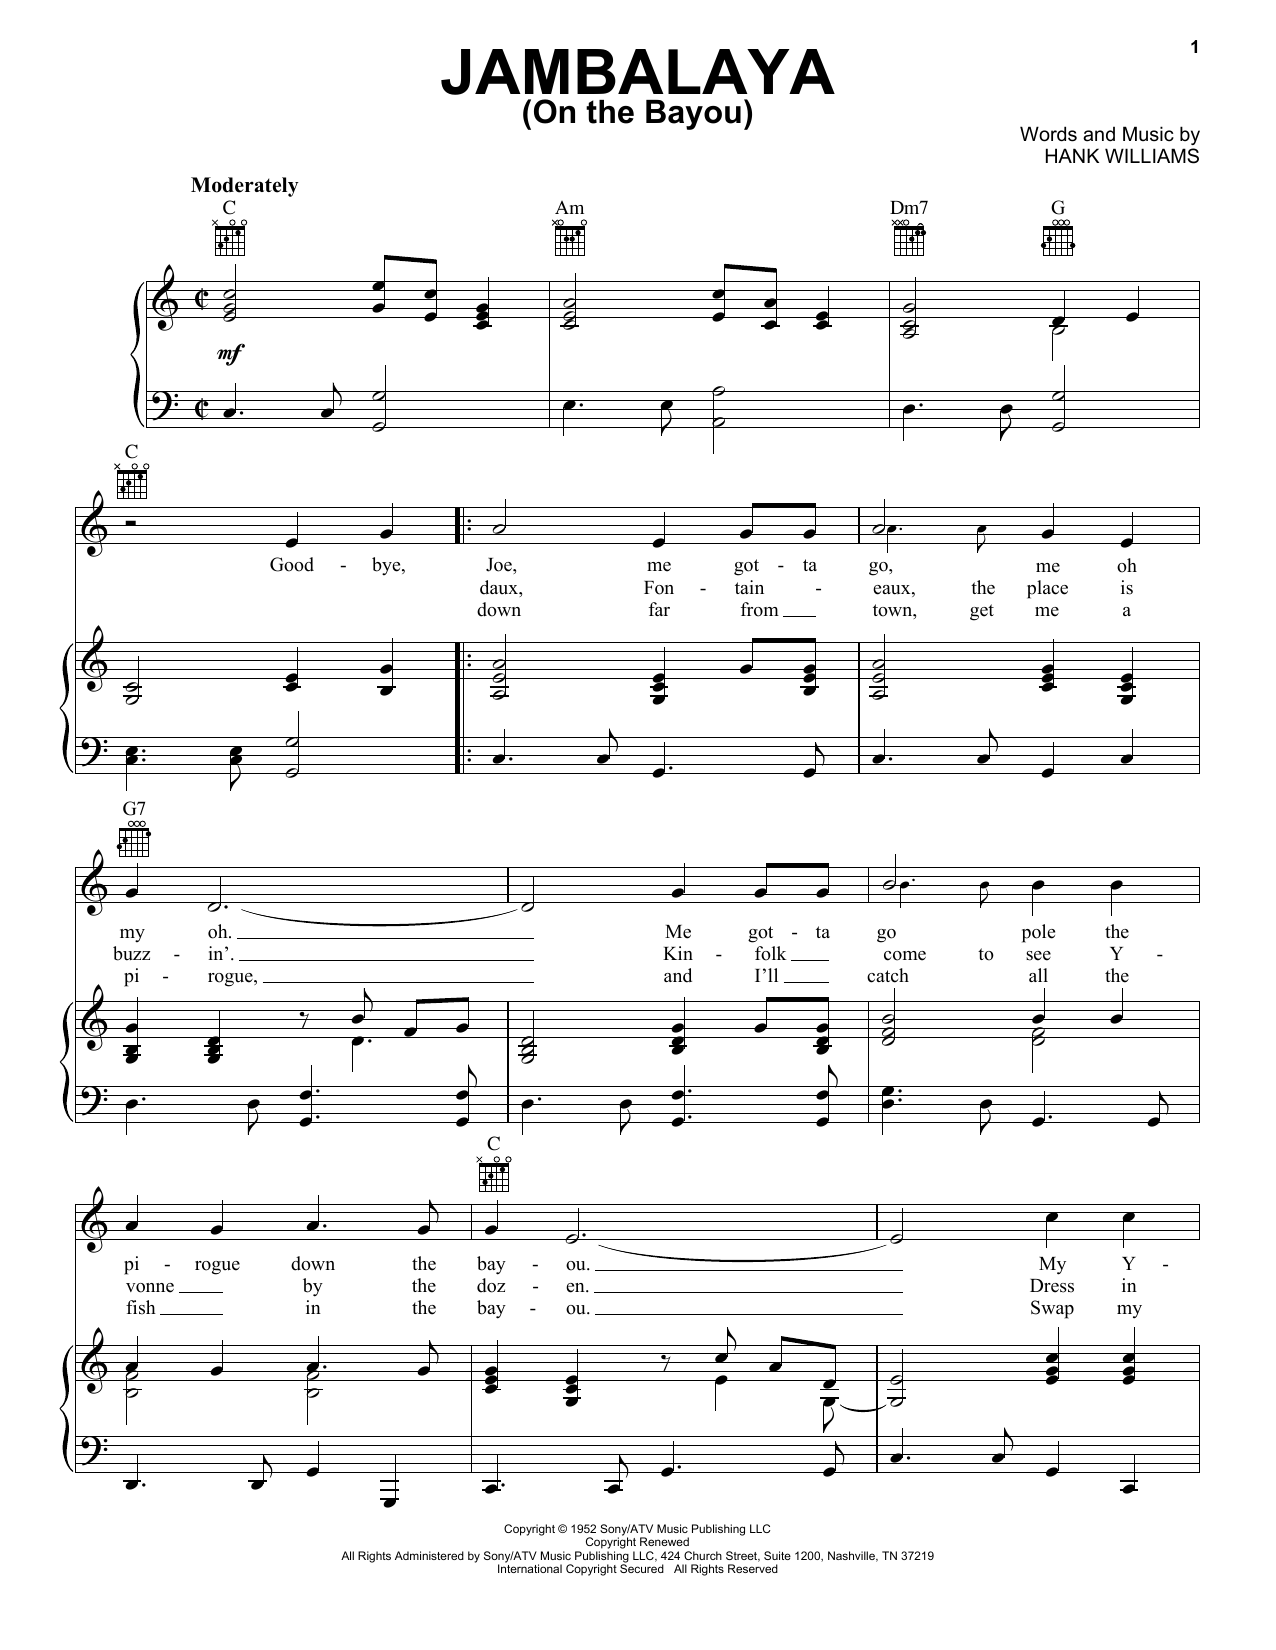 Hank Williams Jambalaya (On The Bayou) Sheet Music Notes & Chords for Real Book – Melody, Lyrics & Chords - Download or Print PDF